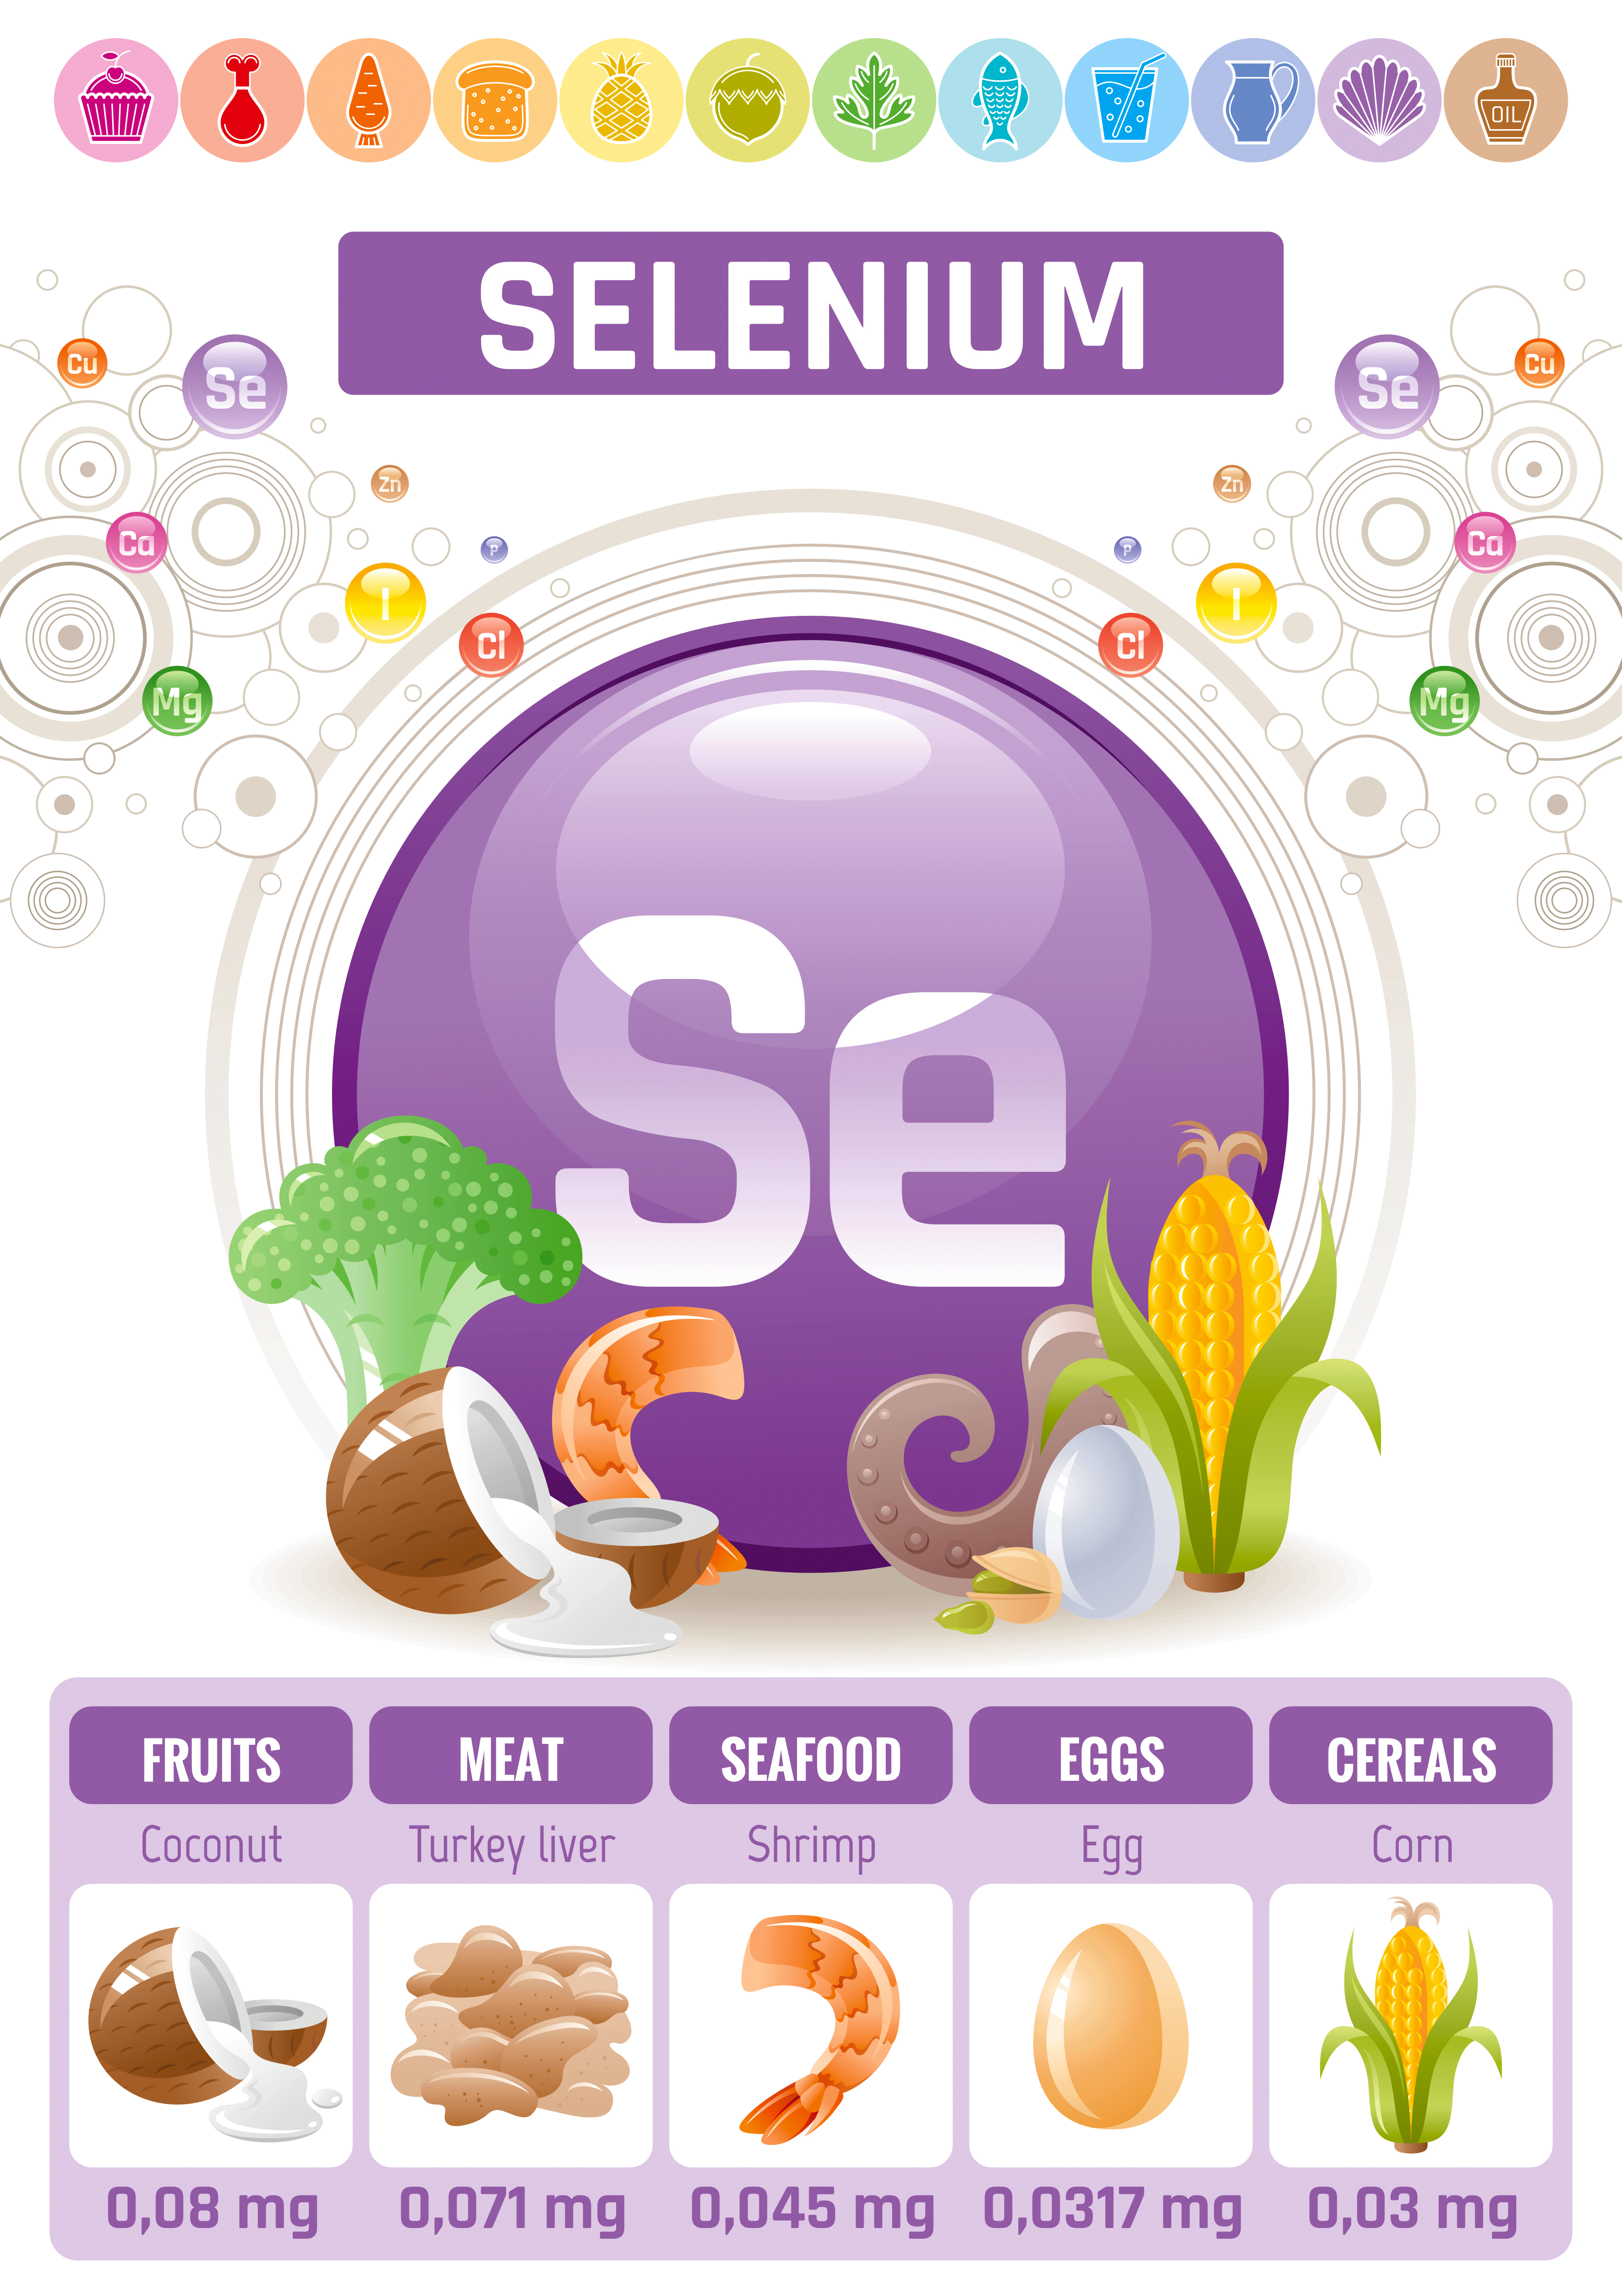 Selenium - basic information - infographic